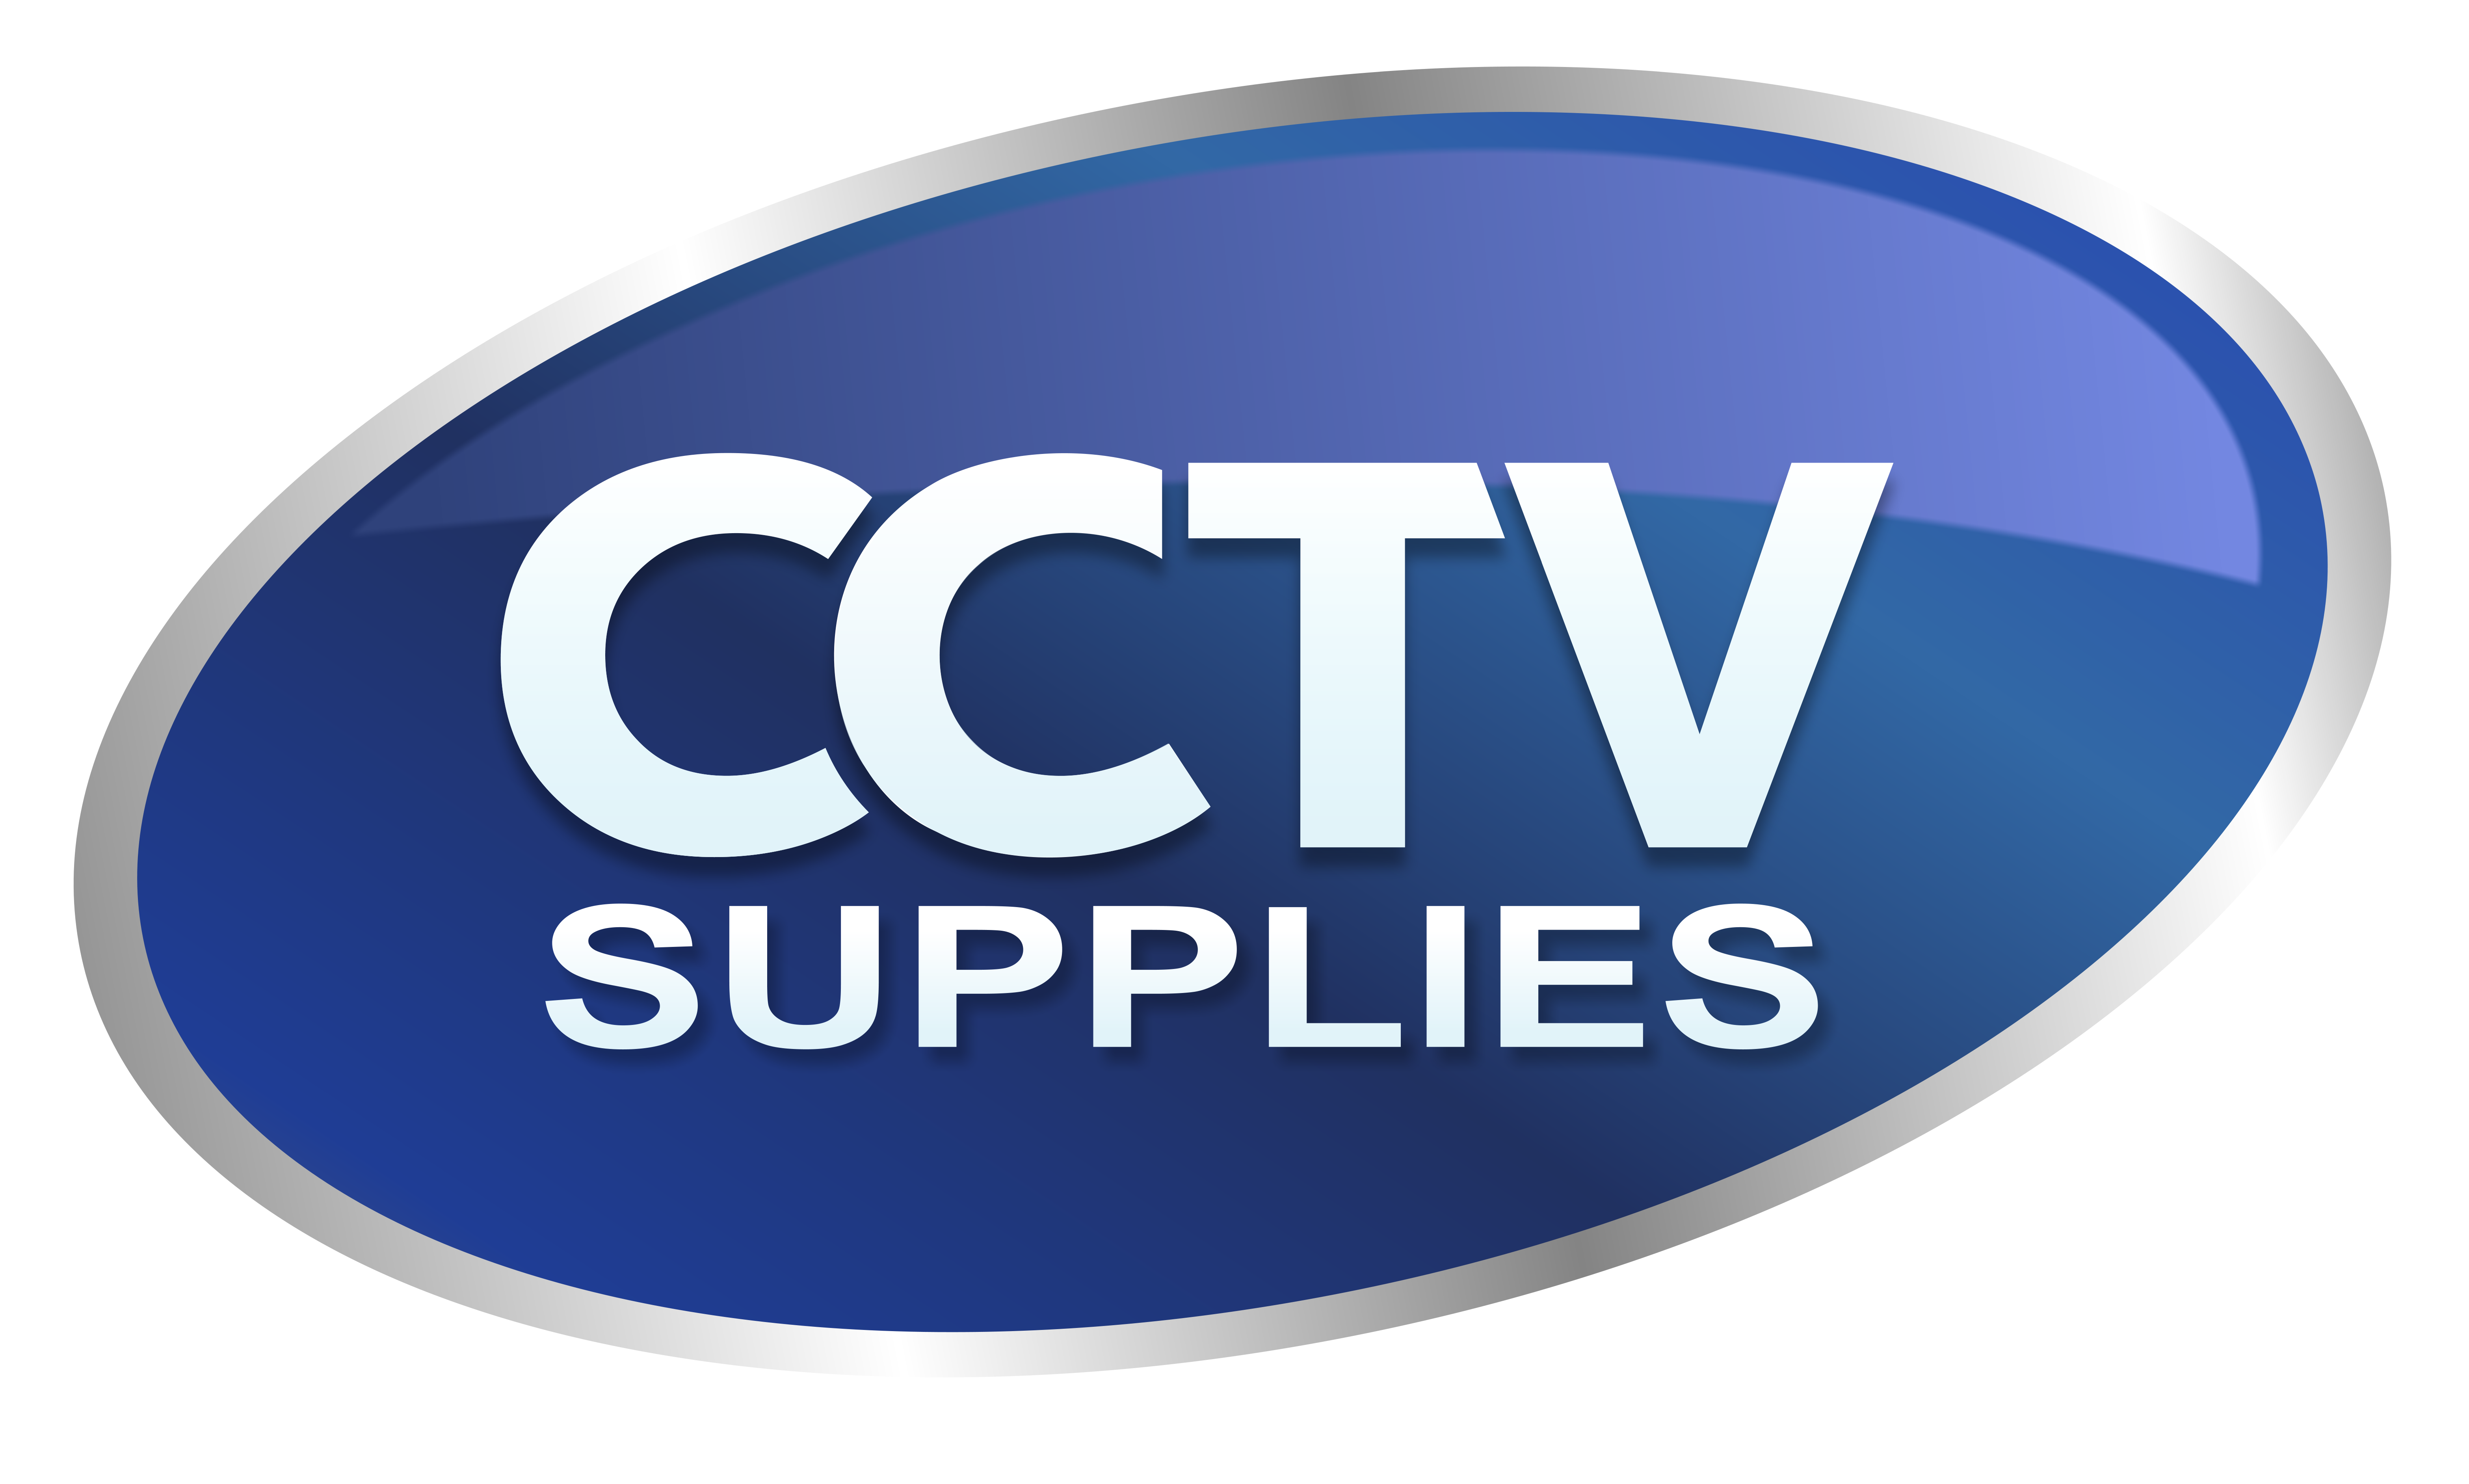 CCTV Supplies